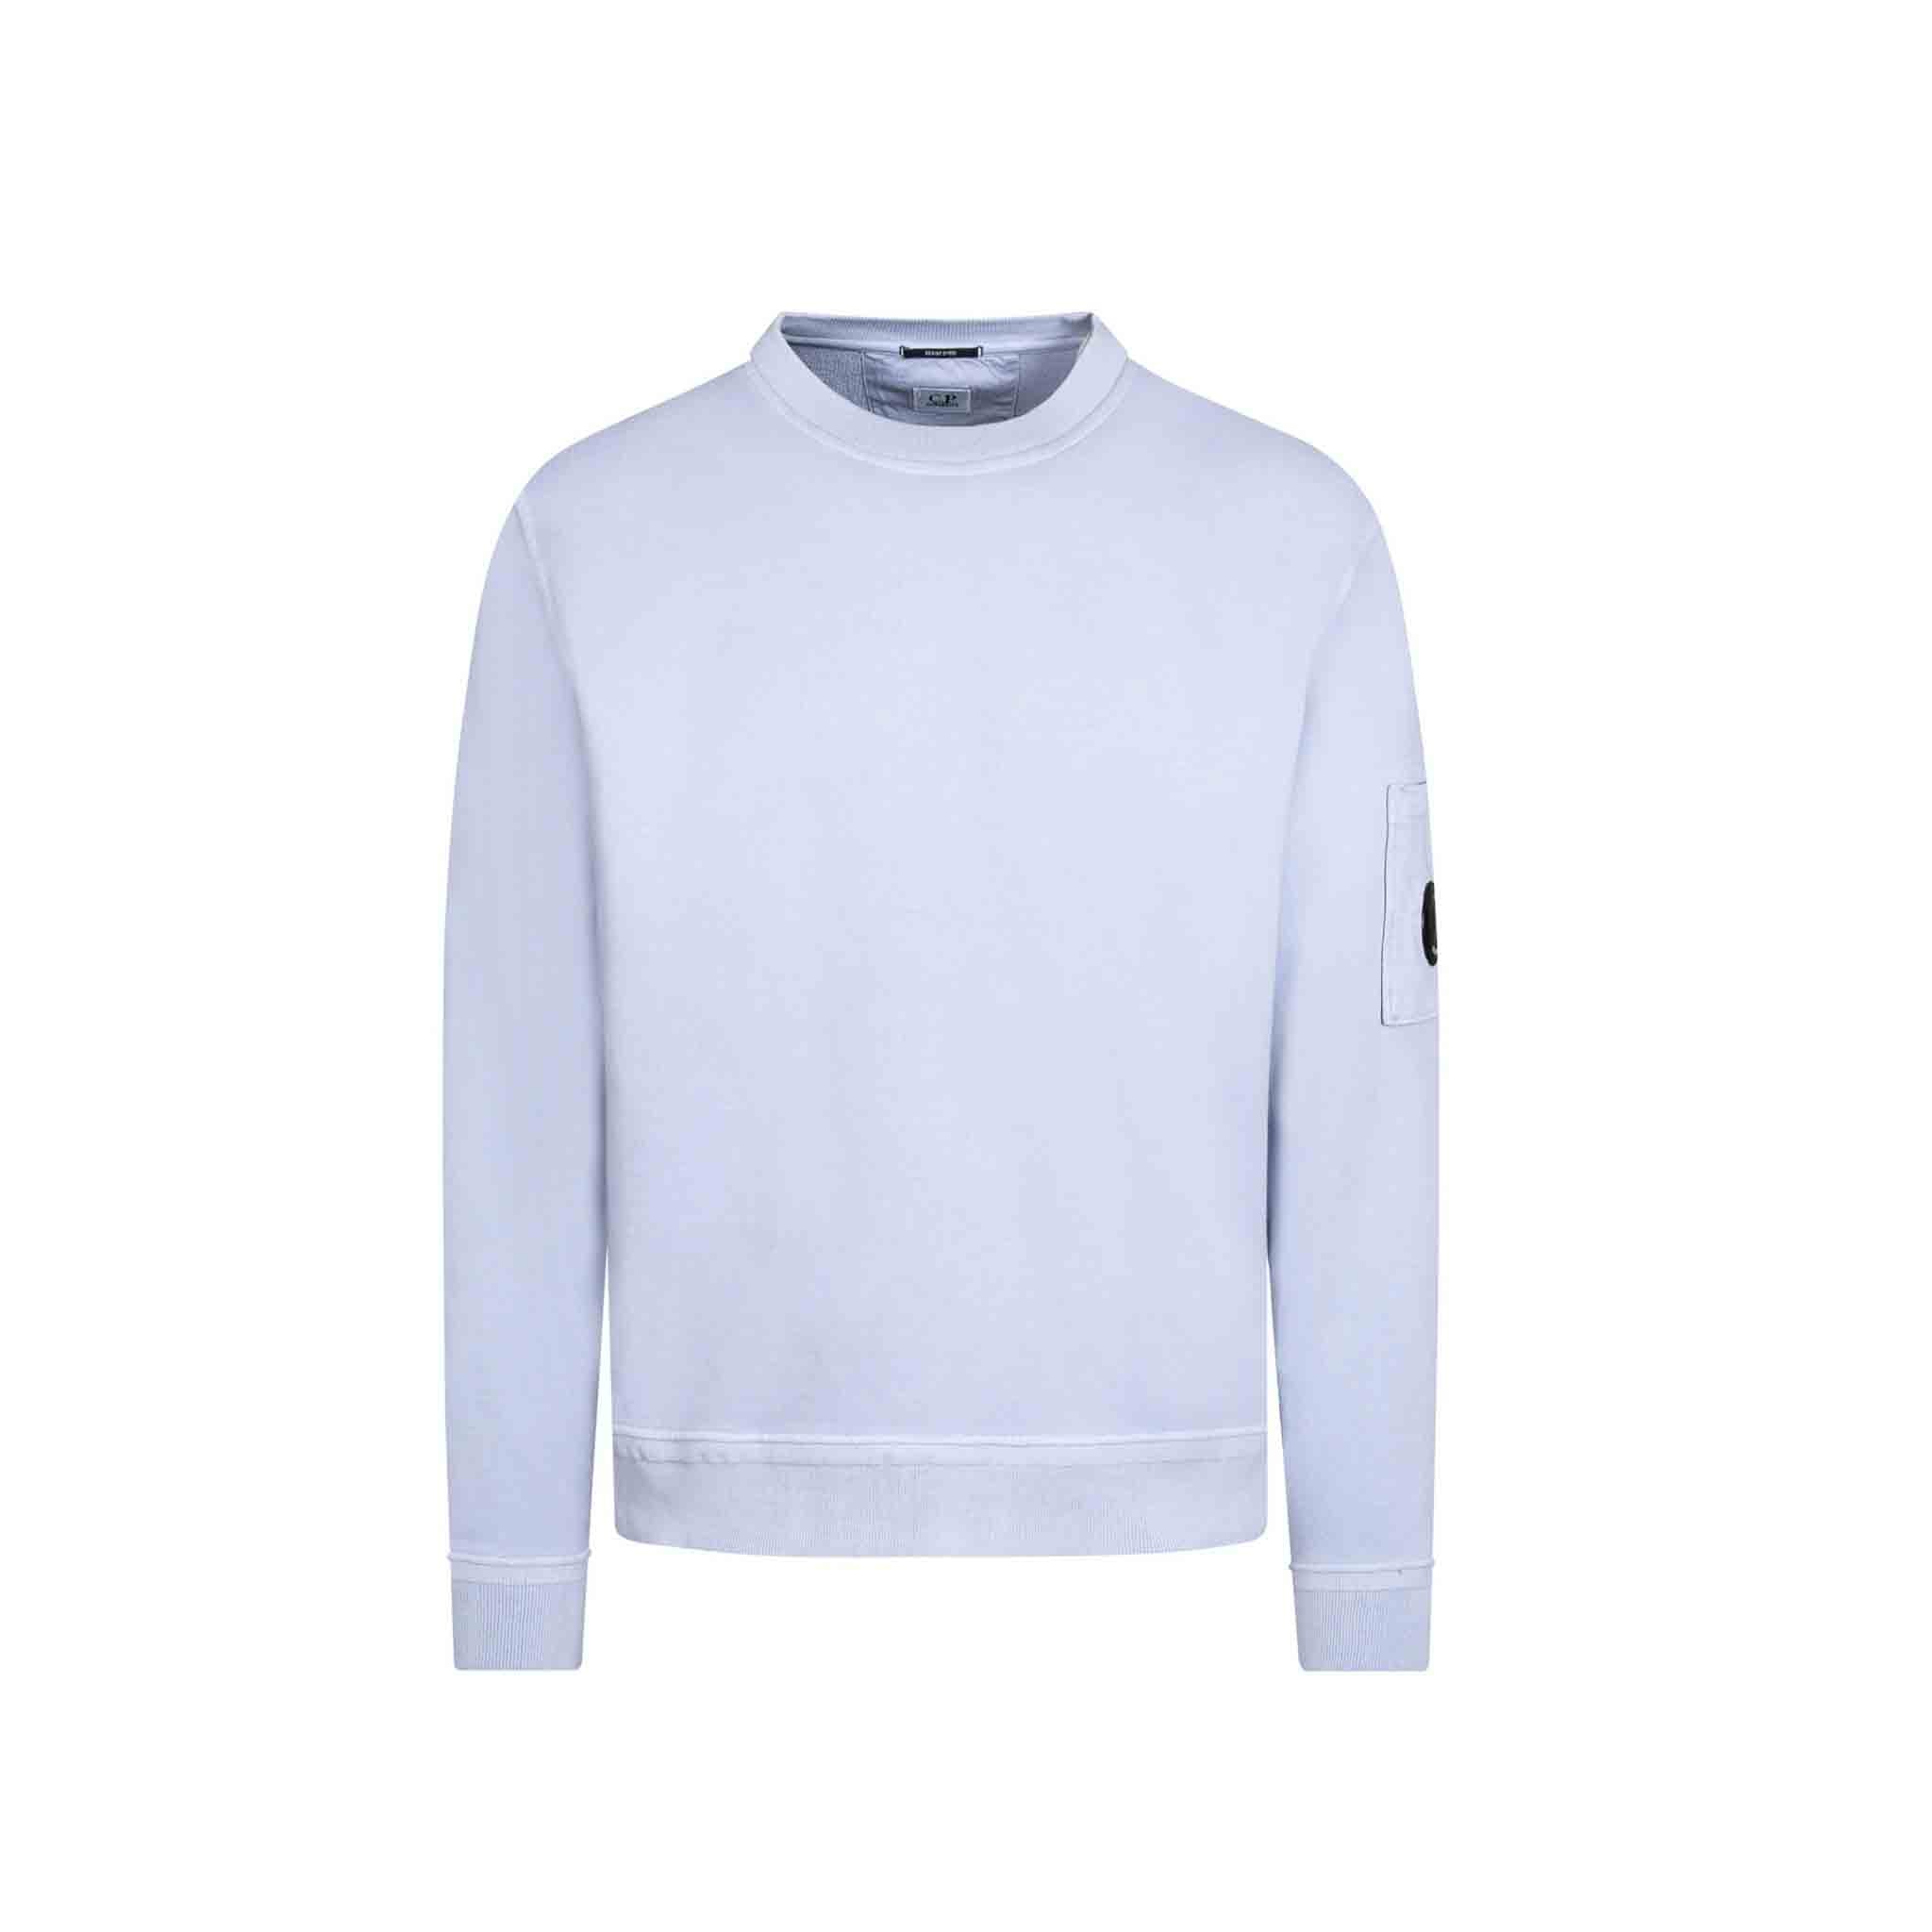 C.P. Company Cotton Fleece Resist Dyed Sweatshirt in Cosmic Sky